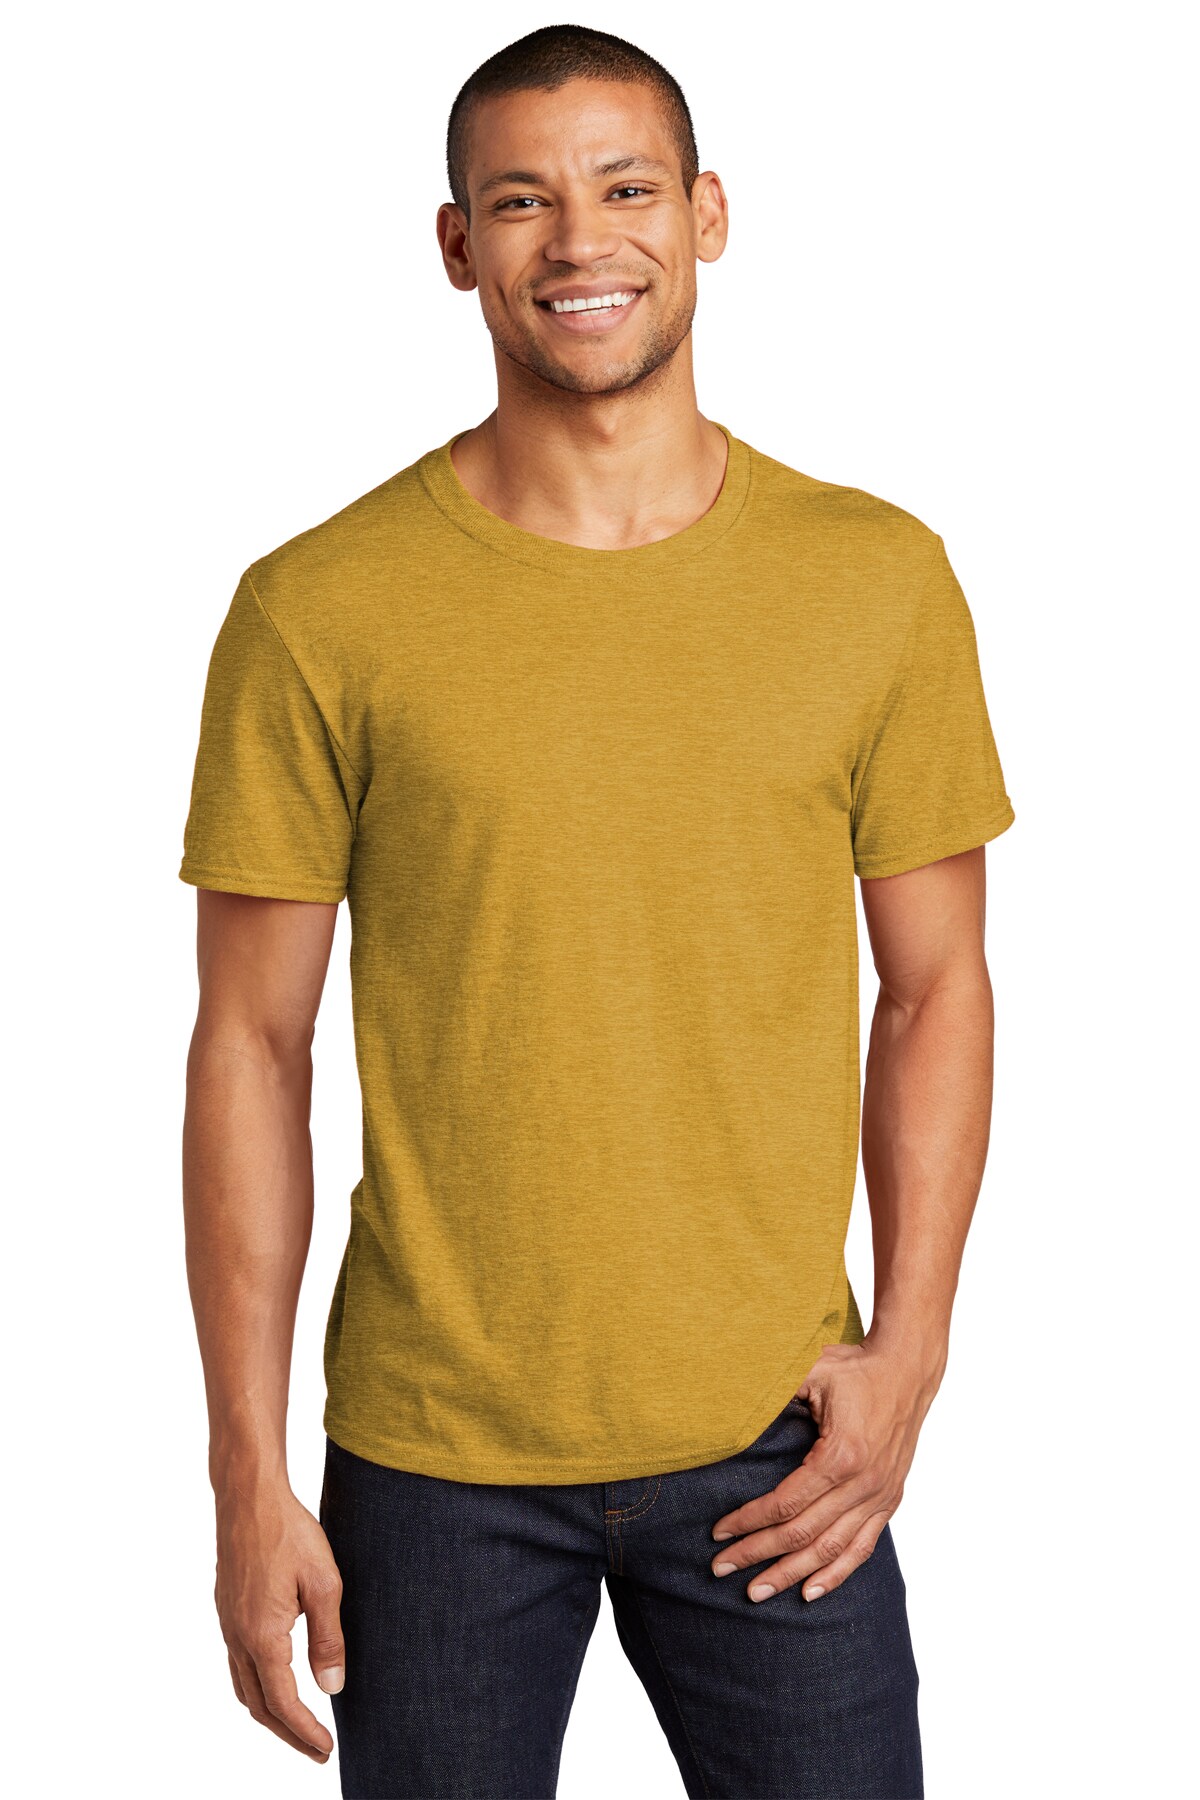 Men's Premium Ring Spun T-Shirt | 5.2-0z , 50/50 combed ring spun  cotton/poly | Durable, High Quality & Breathable T-Shirt for men’s | RADYAN®